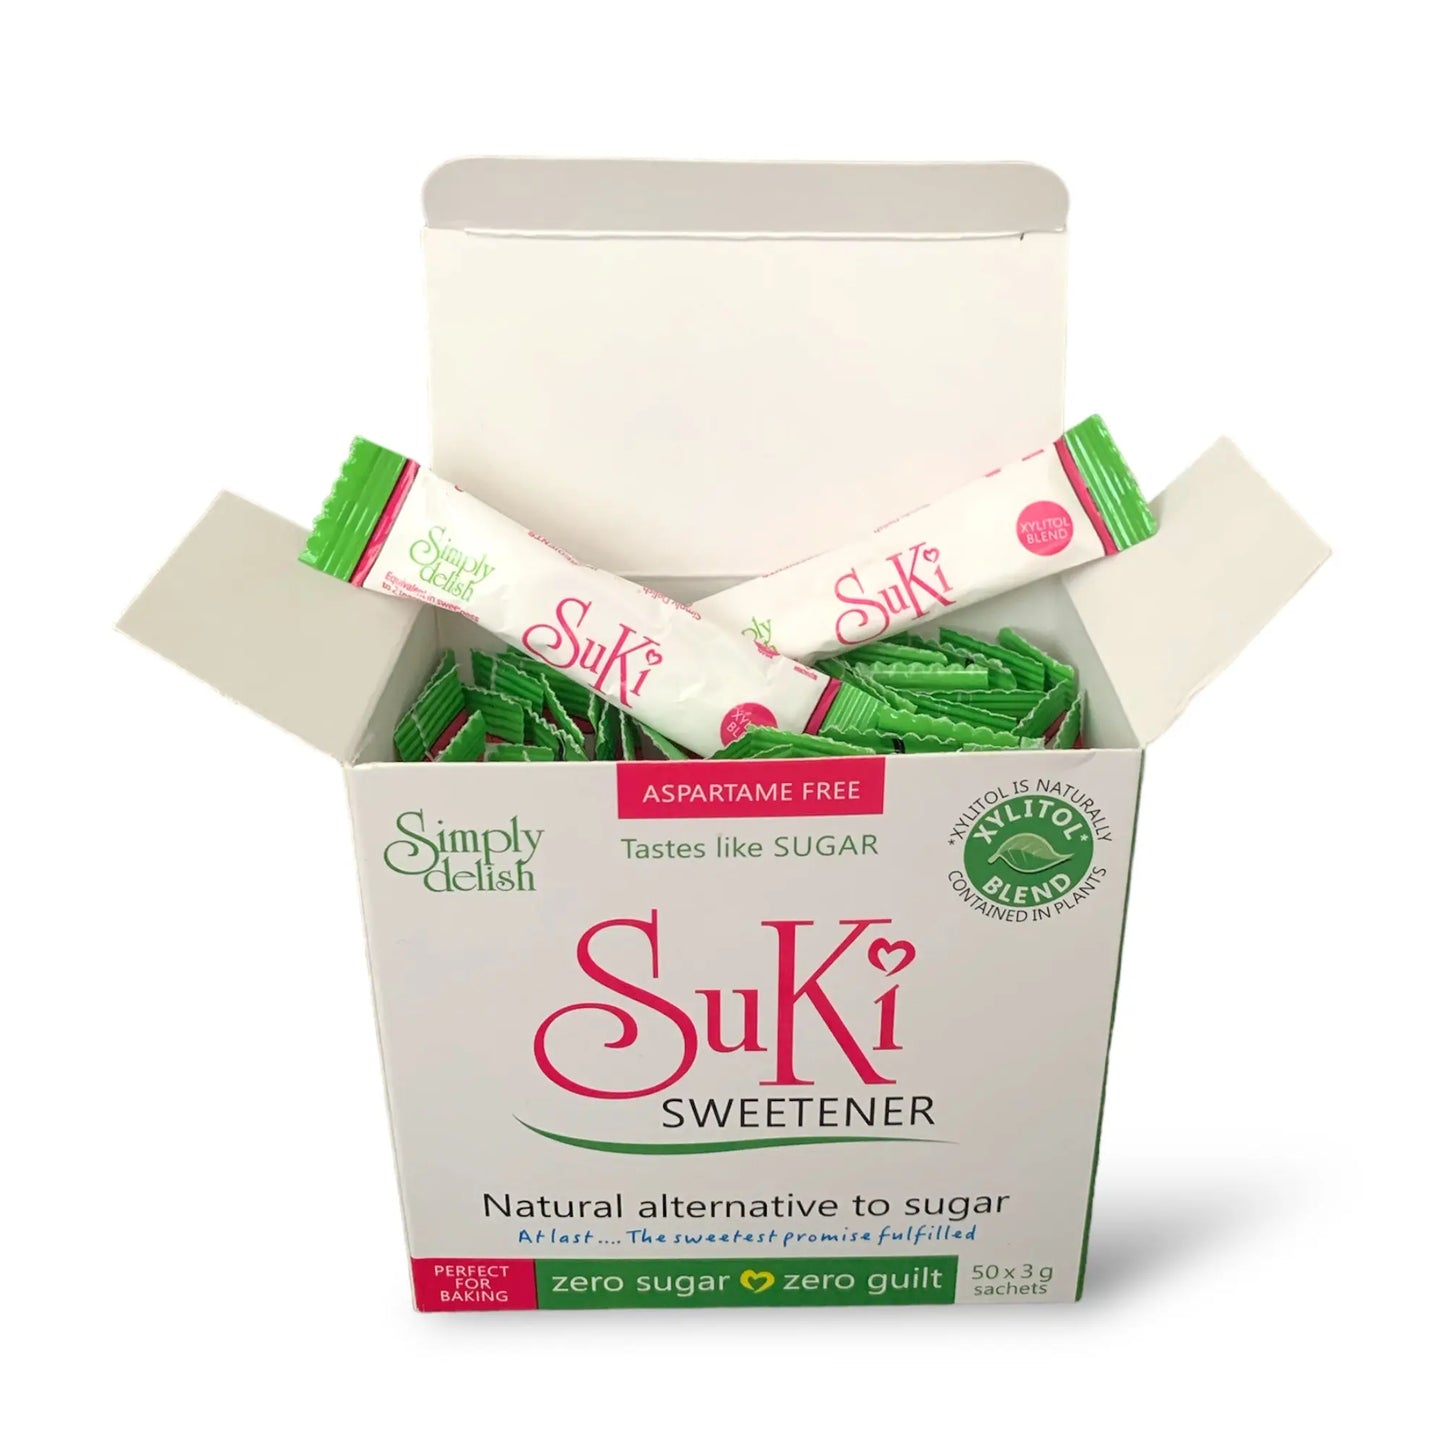 Simply delish Suki Xylitol and Stevia Sweetener Sachets 50x3g